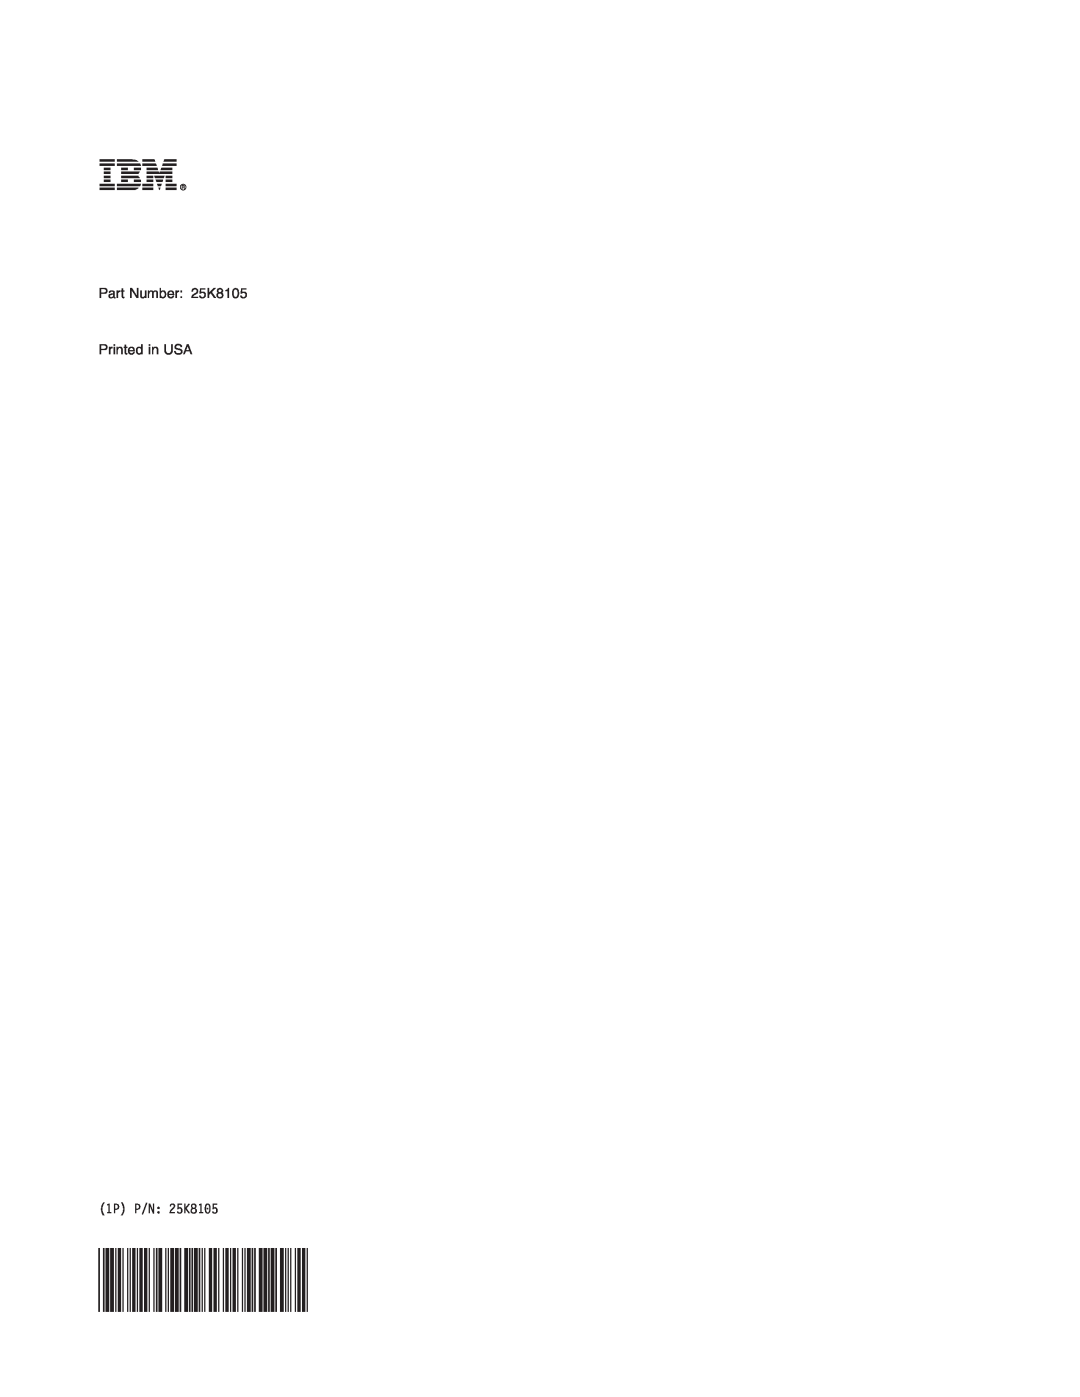 IBM HS40 manual Part Number 25K8105 Printed in USA, 1P P/N 25K8105 